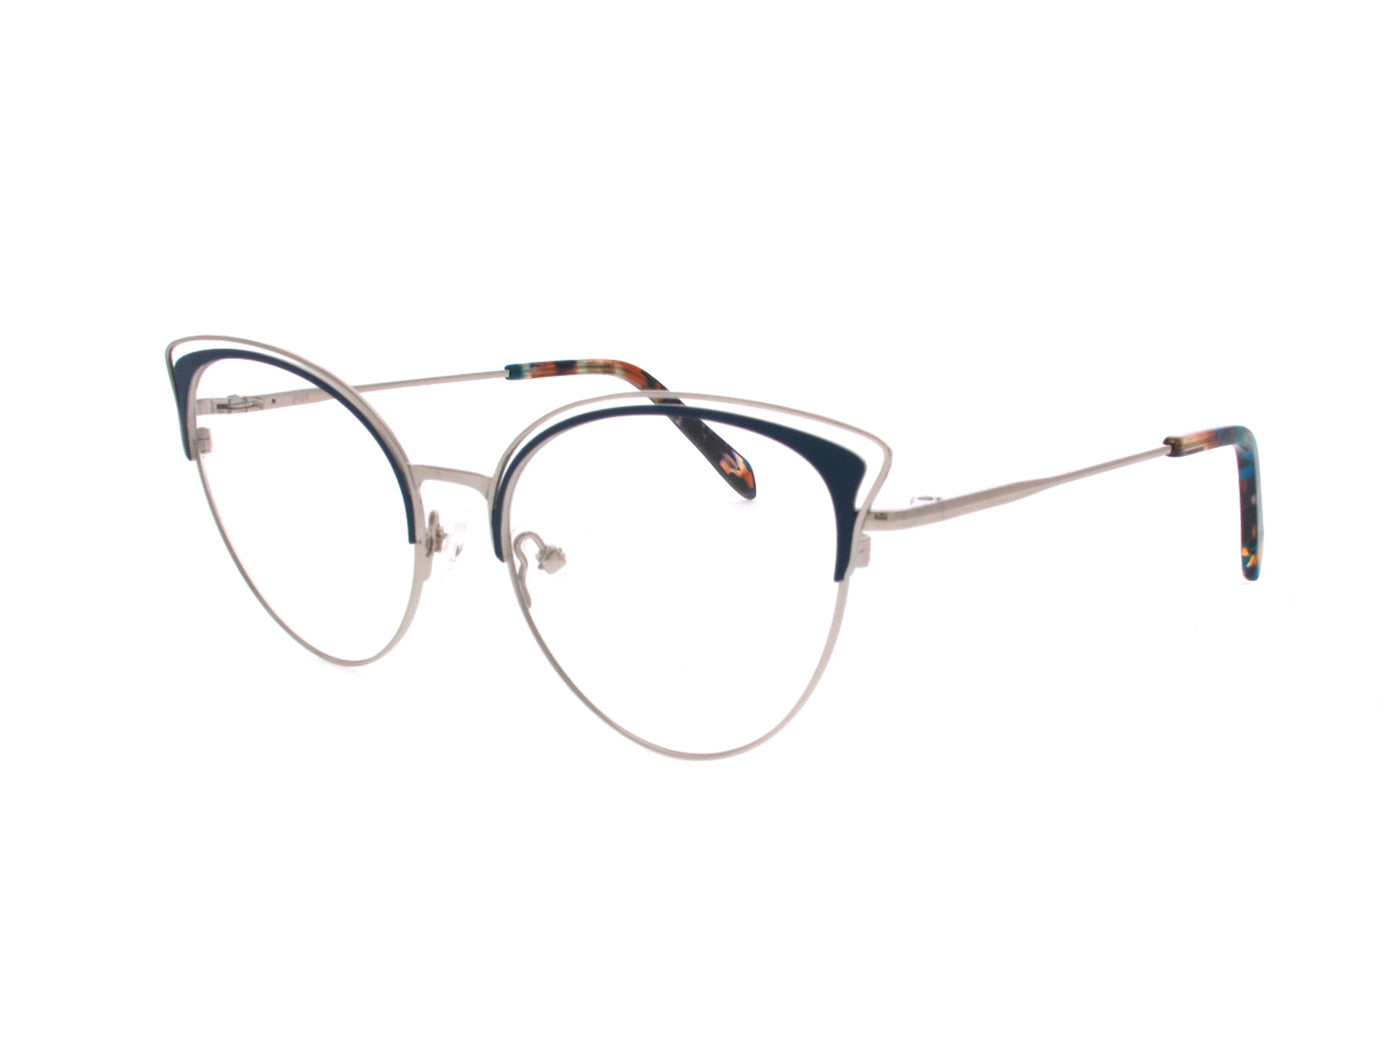 Cateye Glasses 897443